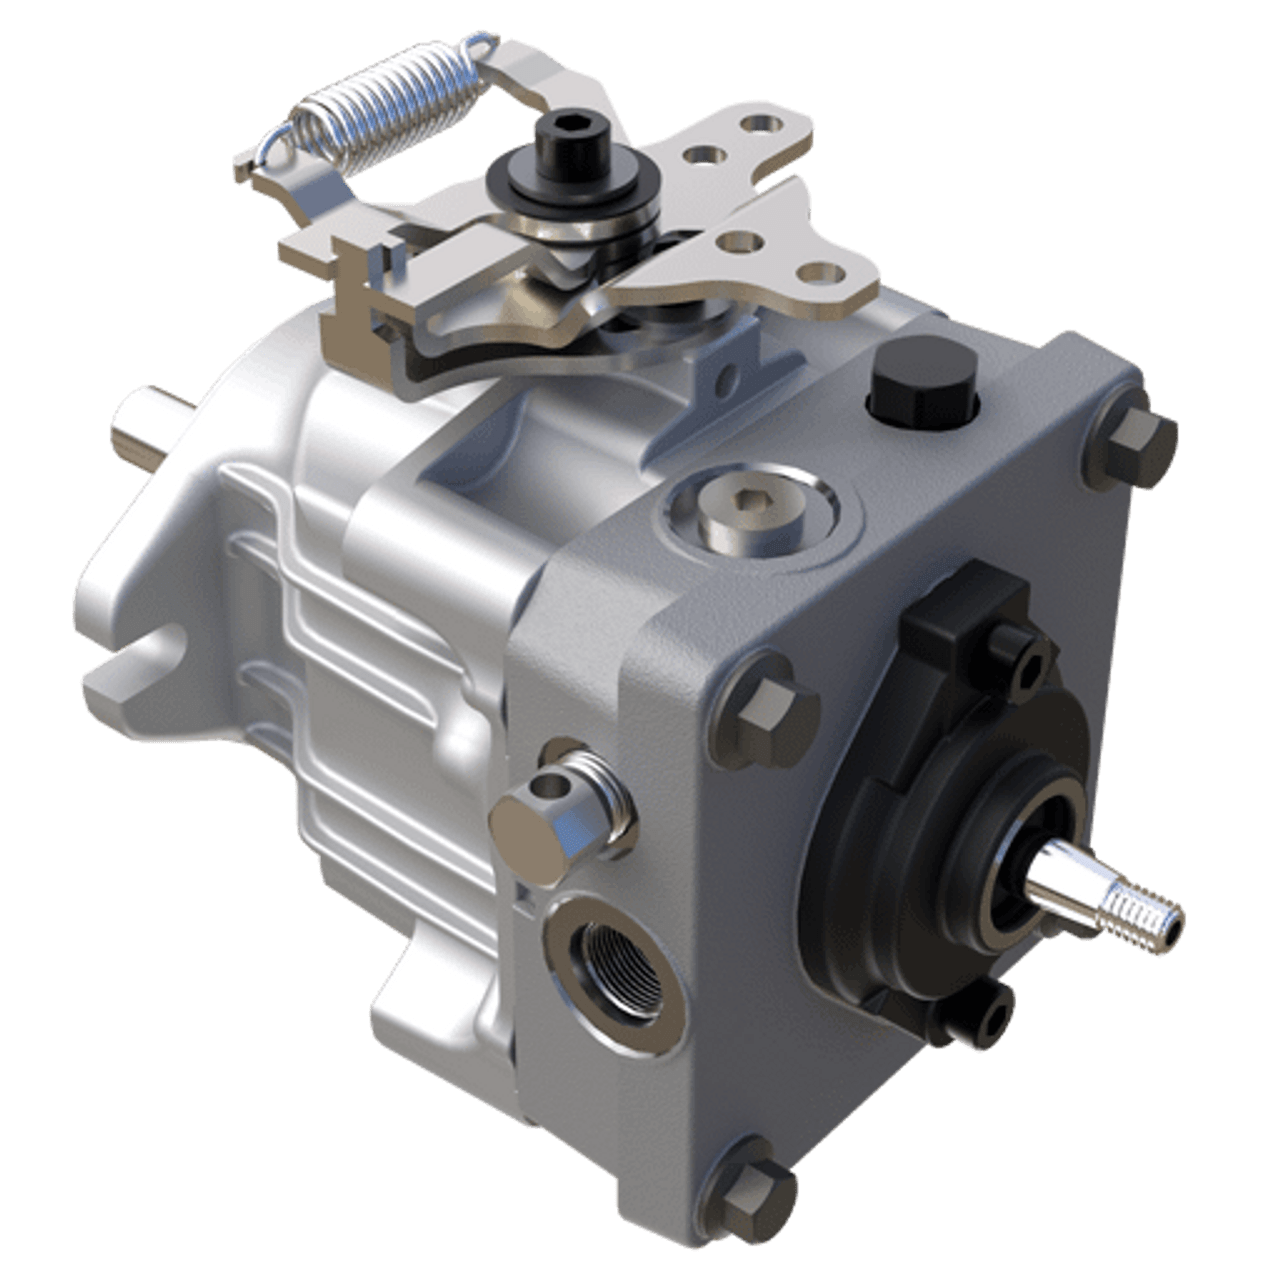 Hydro Gear PG-1JQQ-DY1X-XXXX Hydraulic Pump P Series | Original OEM Part | Free Shipping - LawnMowerPartsWorld.com